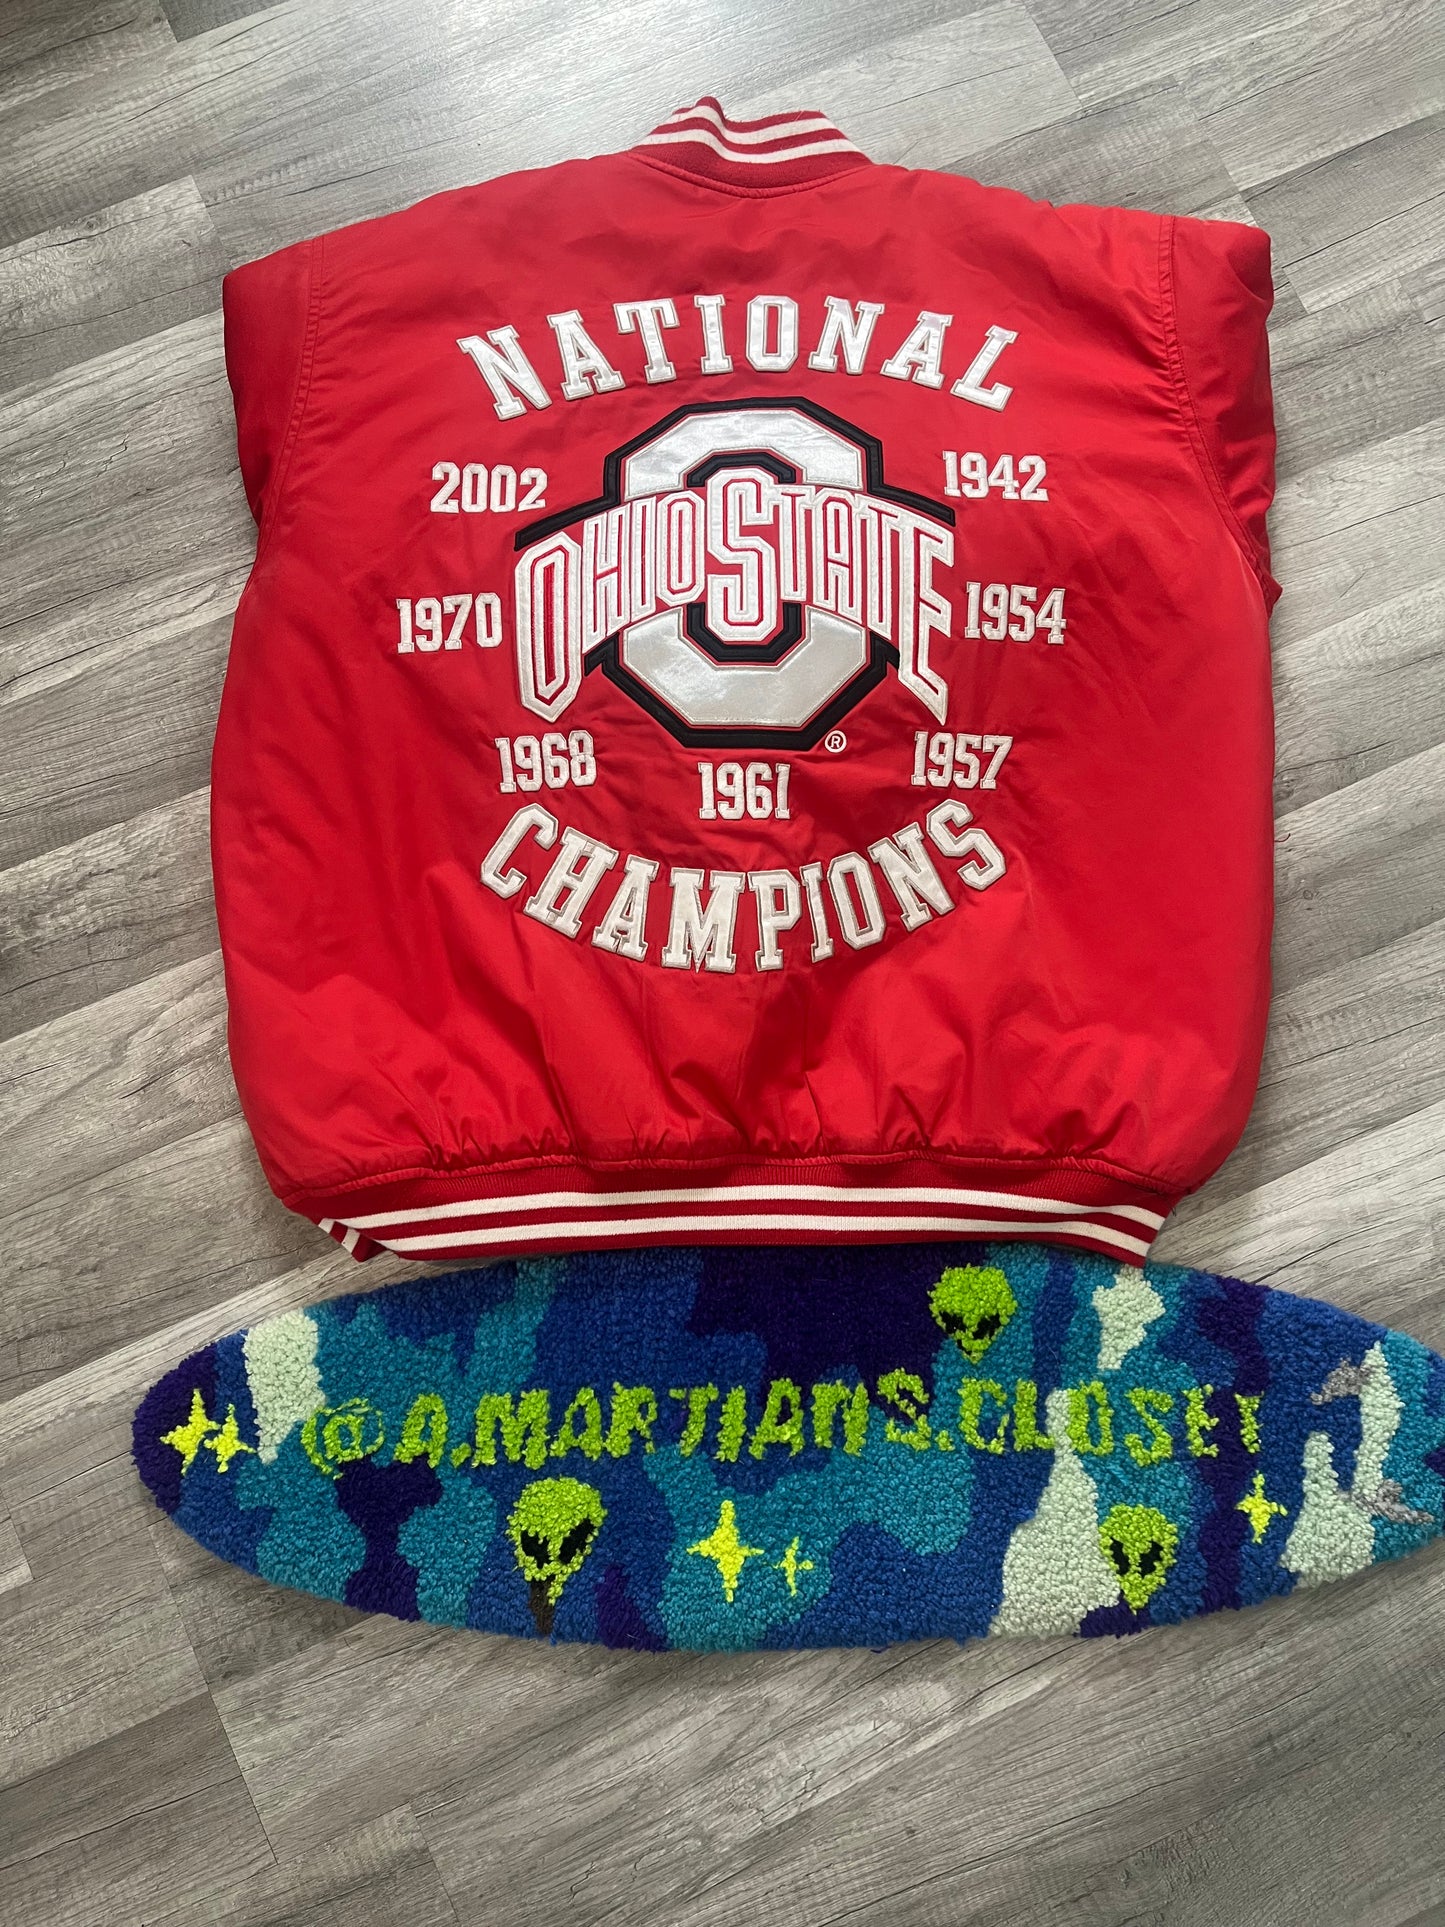 Ohio State National Championship Titles Jacket (2002)